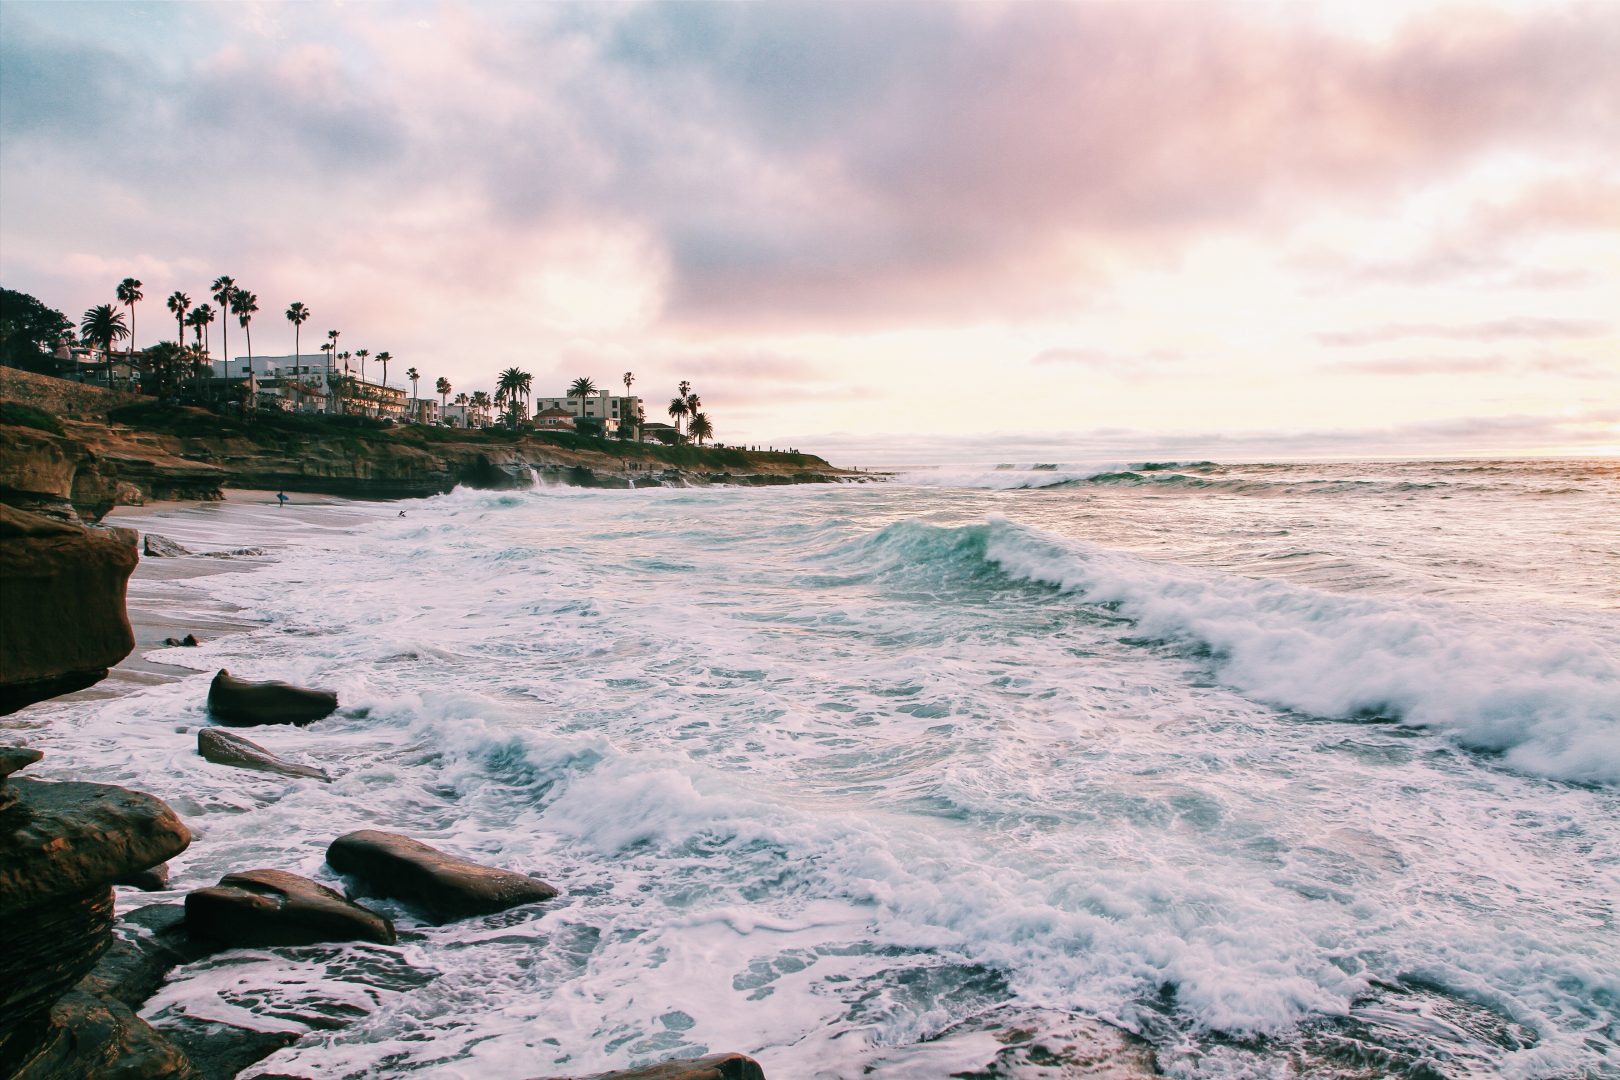 A photo of the California coast by San Diego